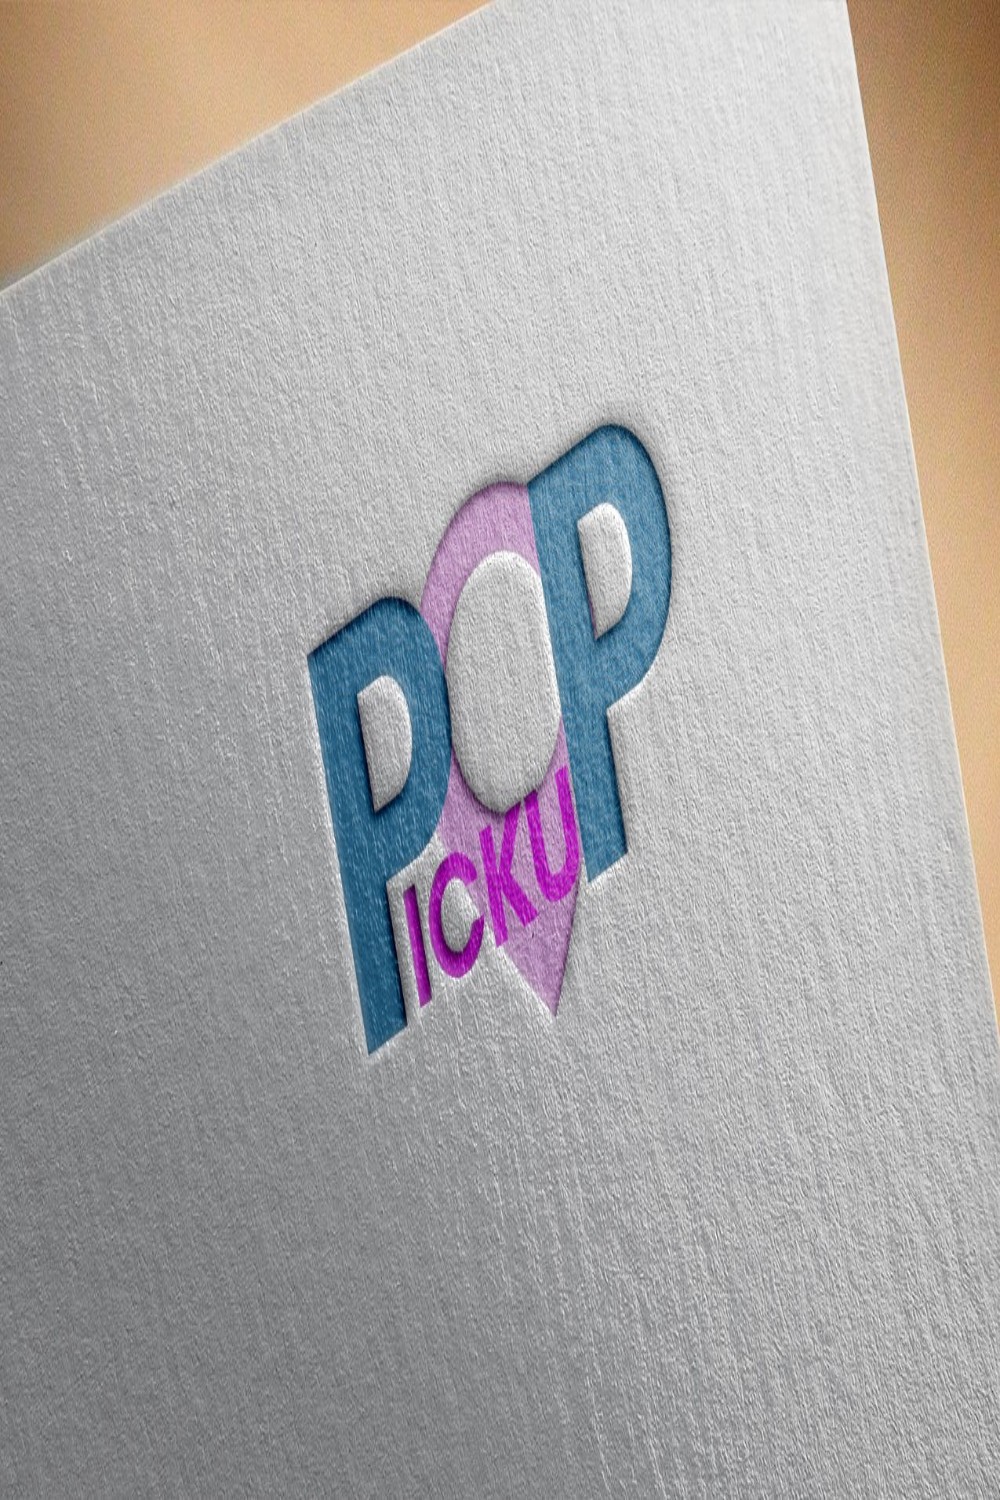 Pickup Logo Design pinterest image.